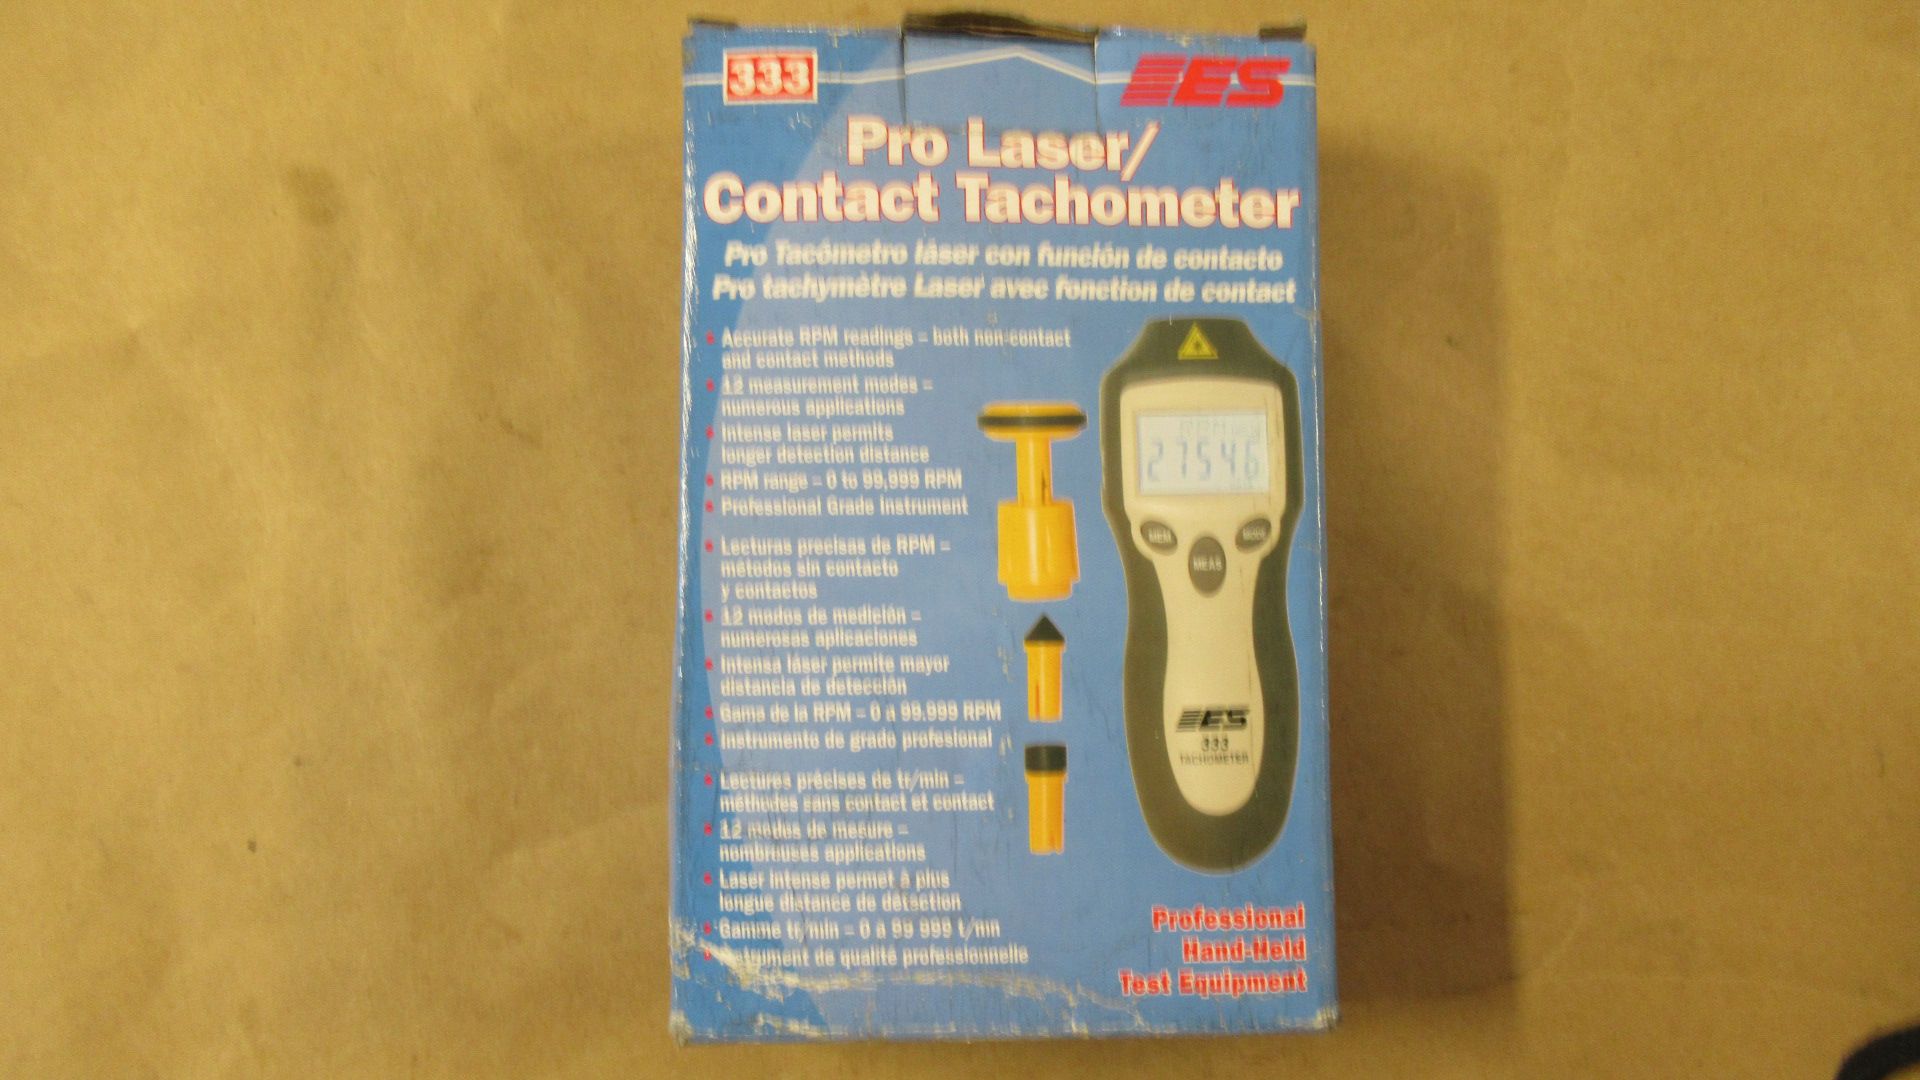 PRO LASER / CONTACT TACHOMETER ES-333